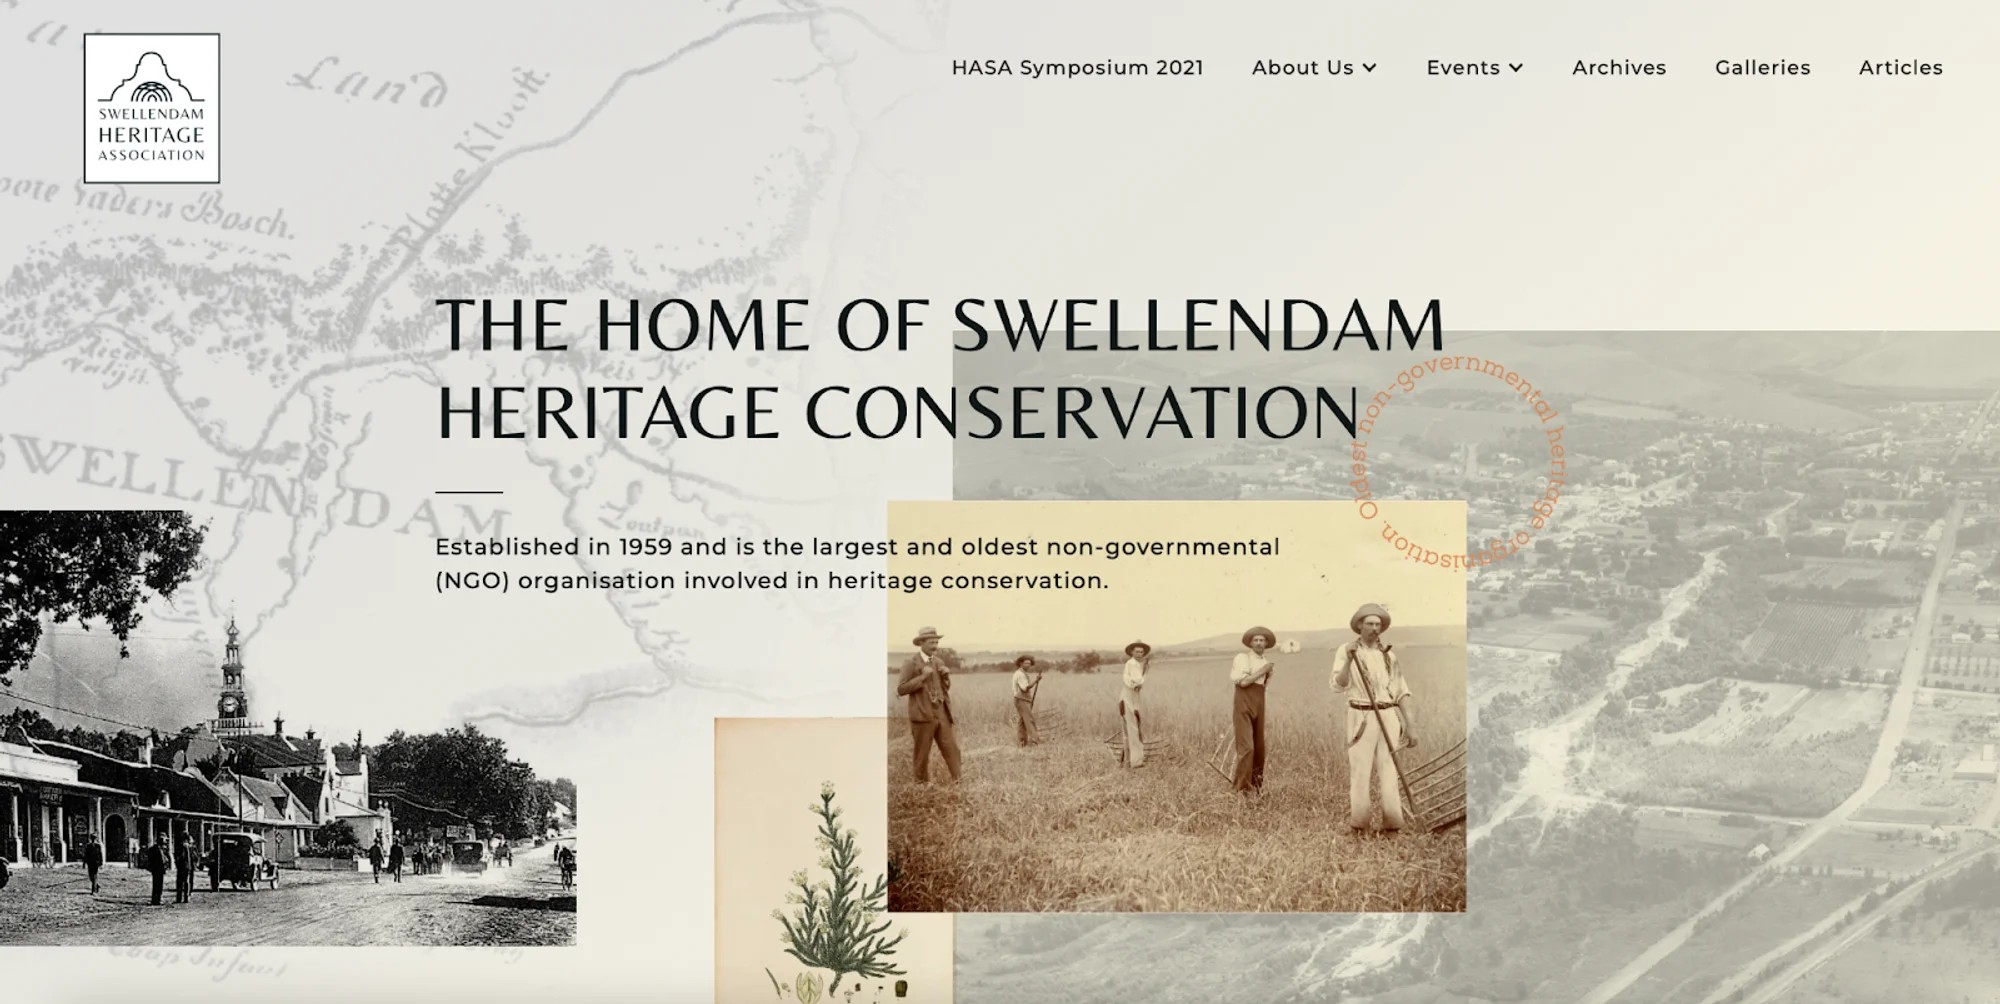 Image multilayers - Swellendam Heritage Association by Milk Moon Studio. 